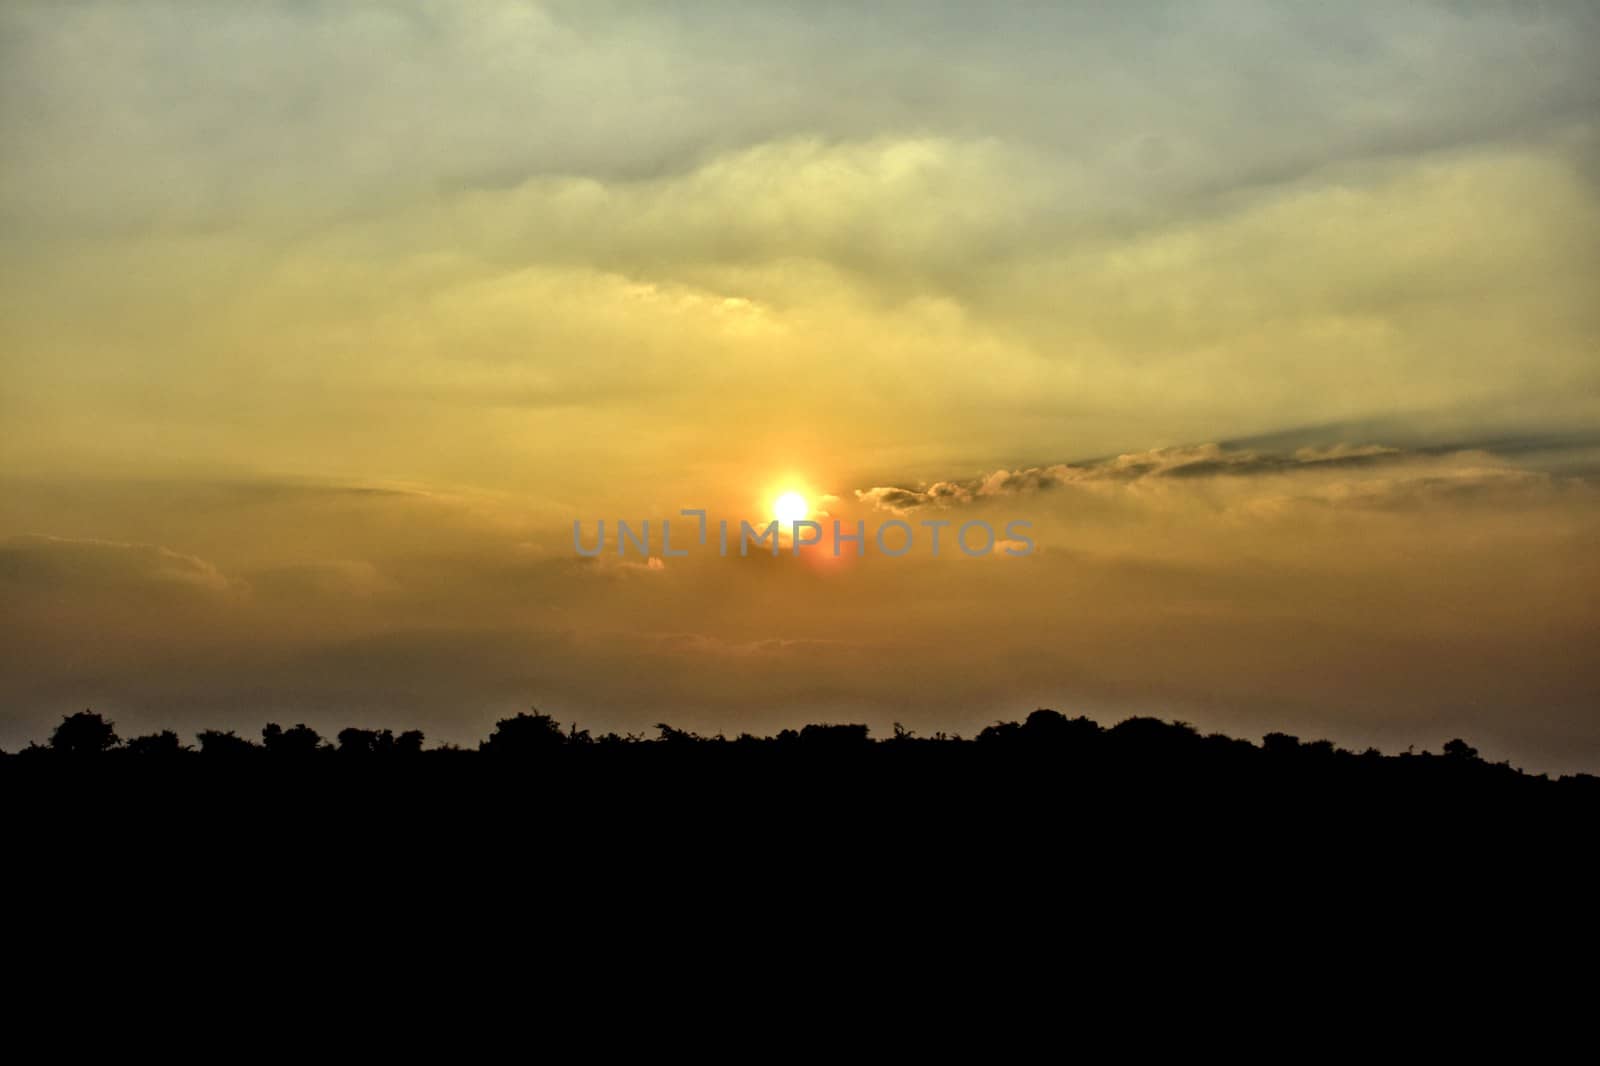 Beauty of Rising Sun by ravindrabhu165165@gmail.com